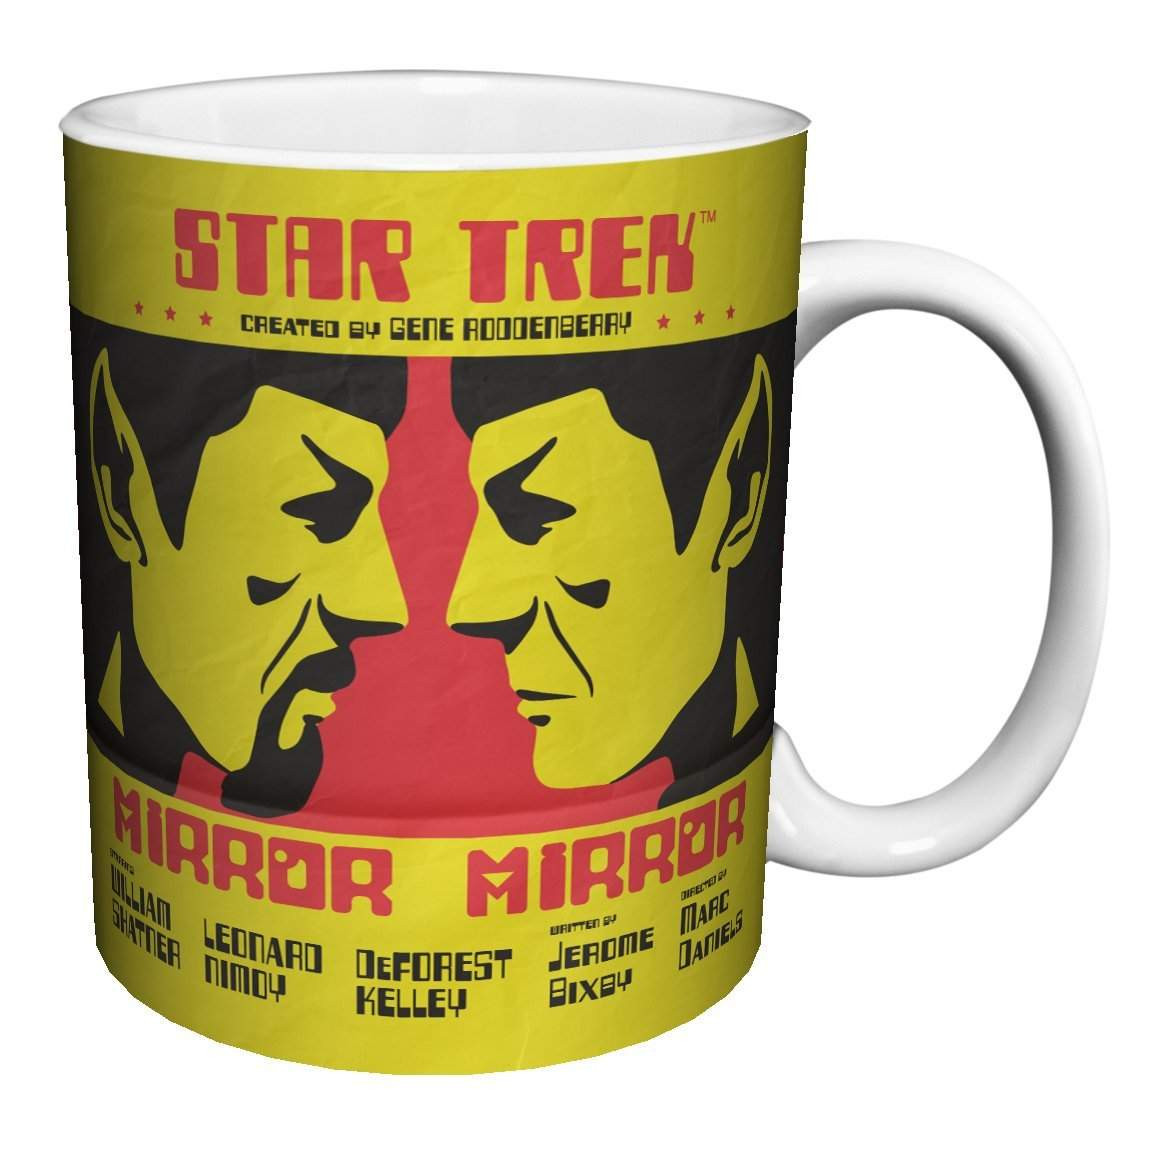 Best ideas about Star Trek Gift Ideas
. Save or Pin Top 10 Best Star Trek Gifts Now.